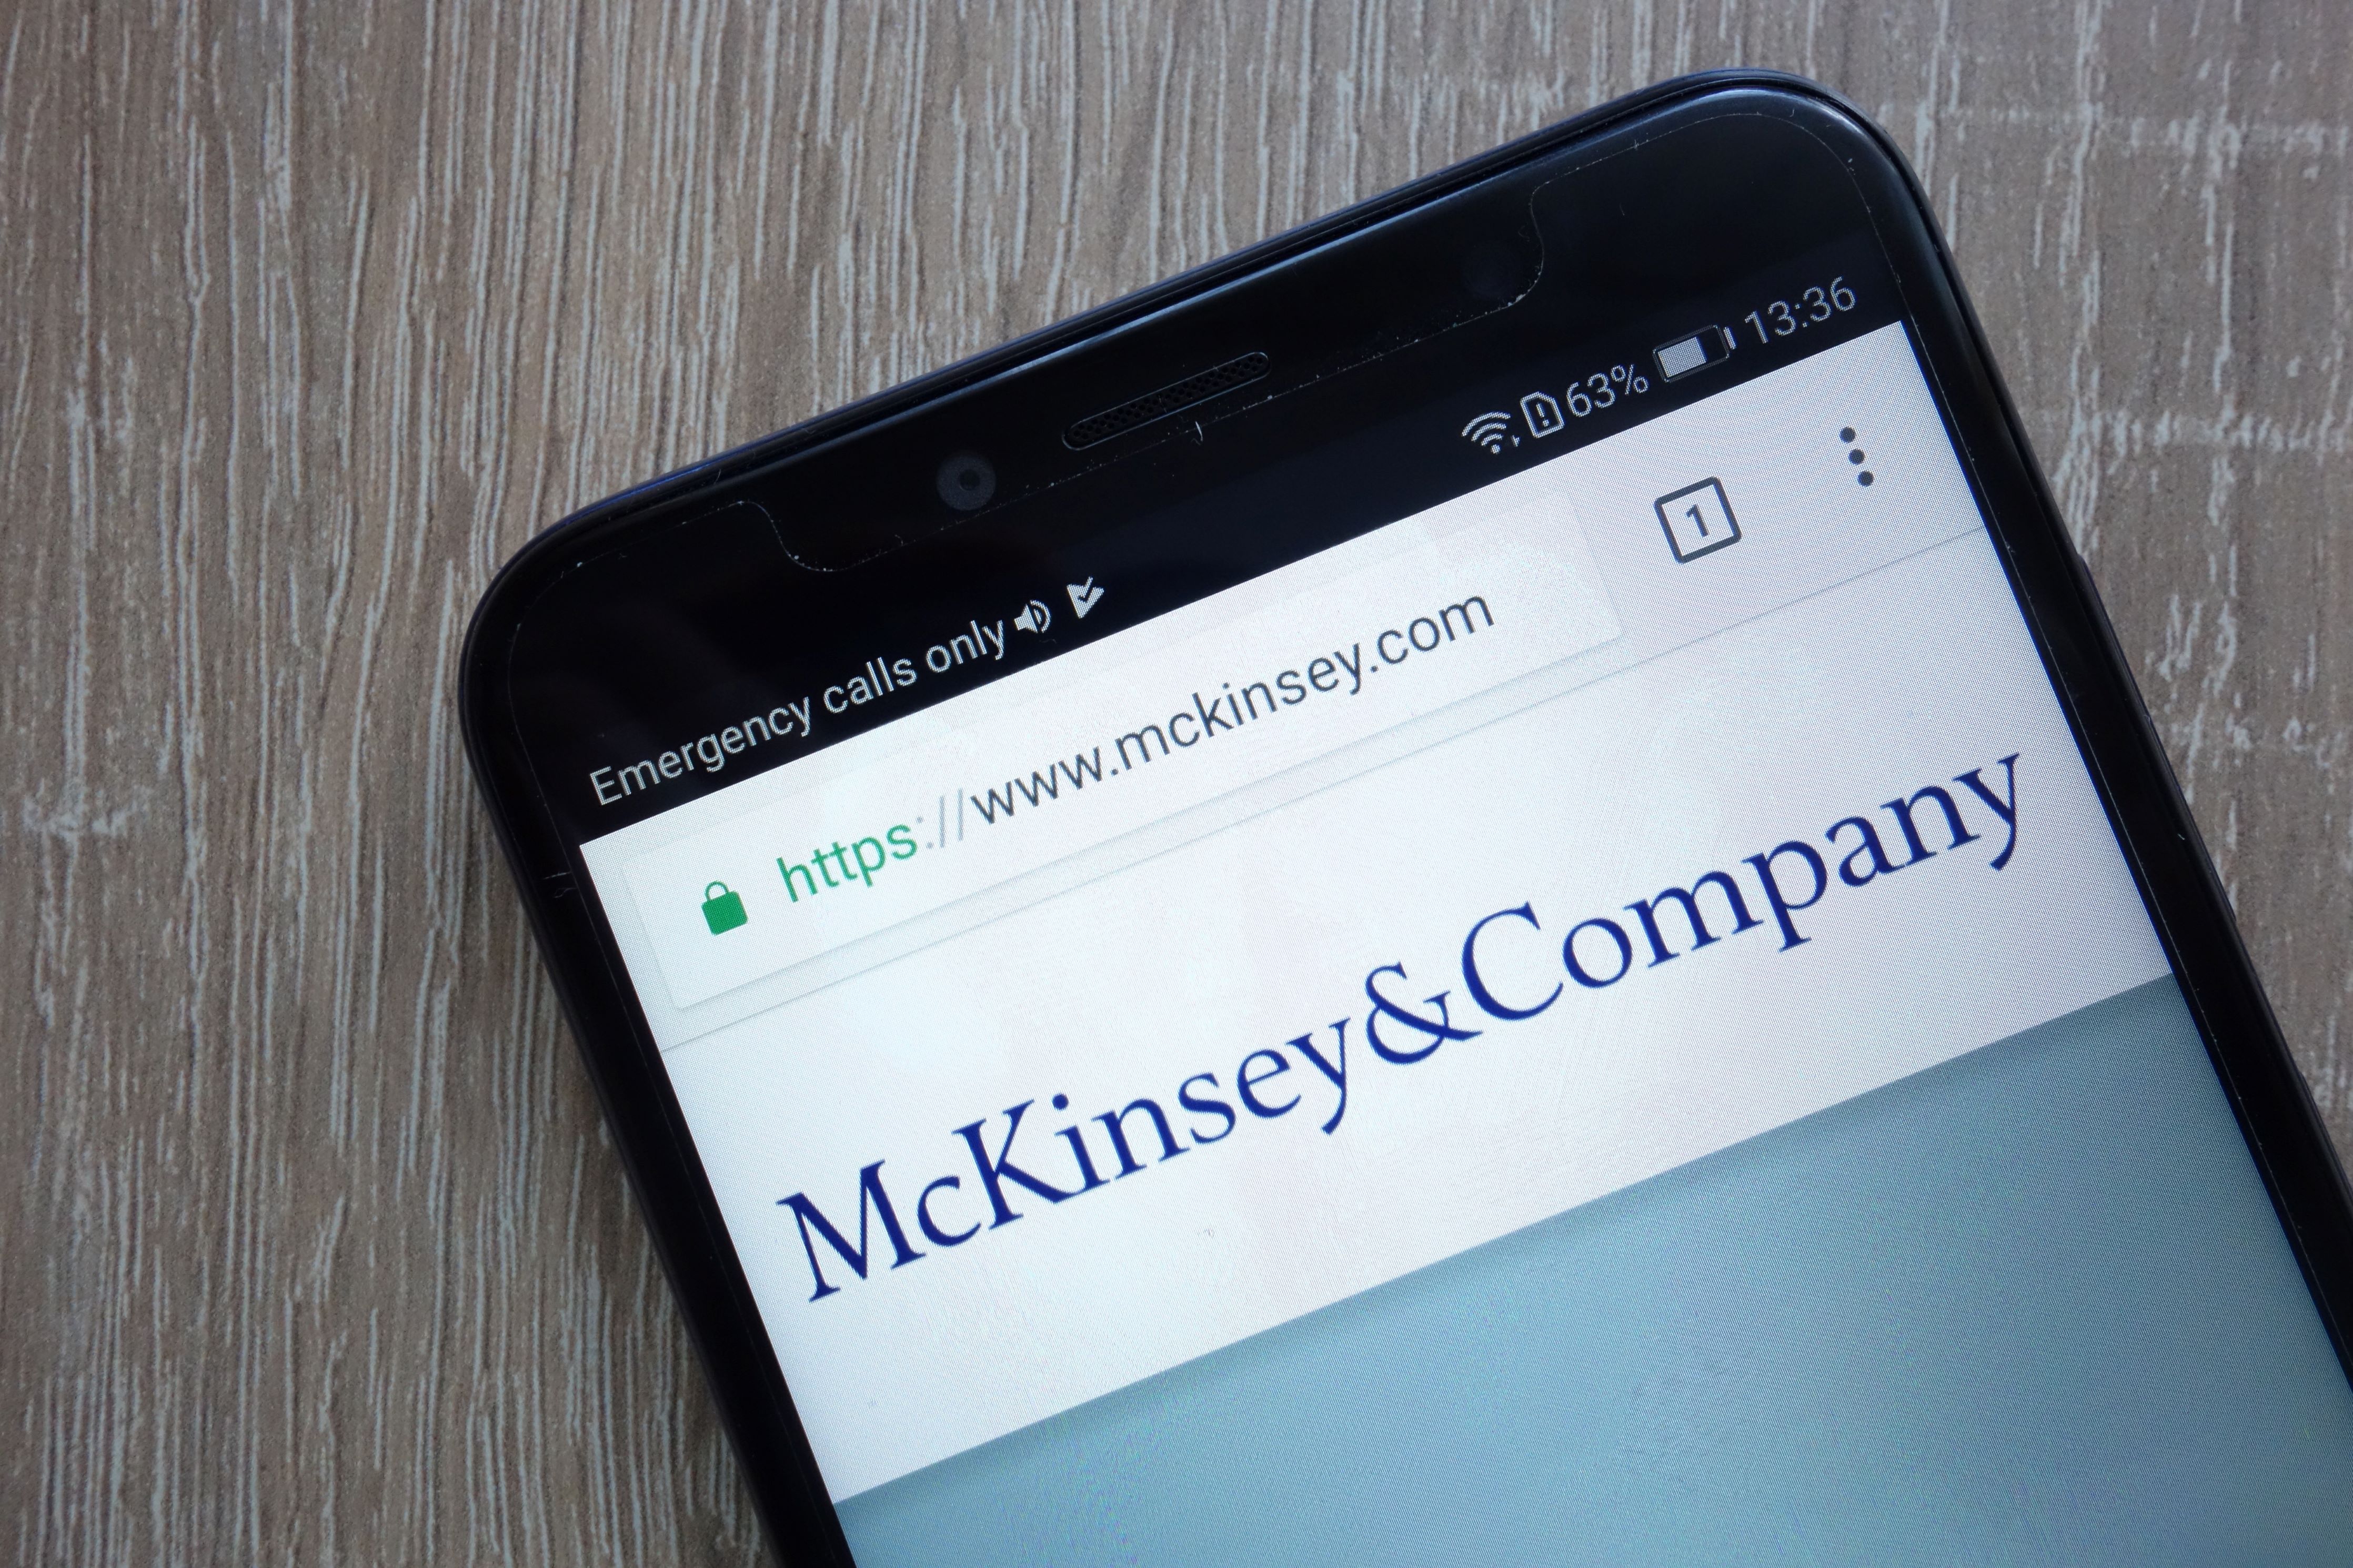 McKinsey logo shown on mobile phone